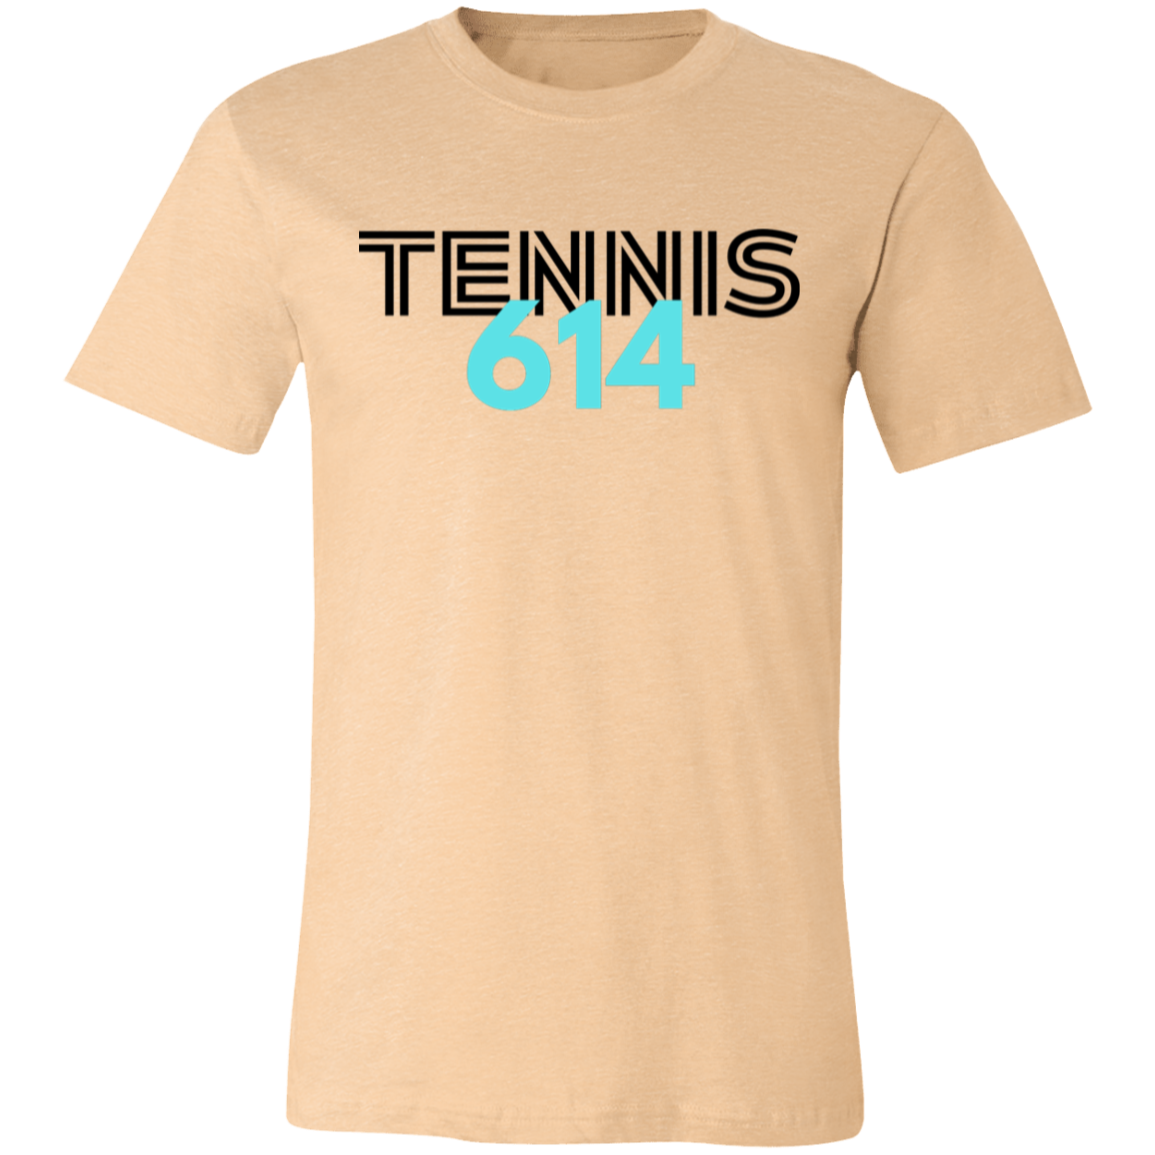 Tennis614 Unisex JerseyTee